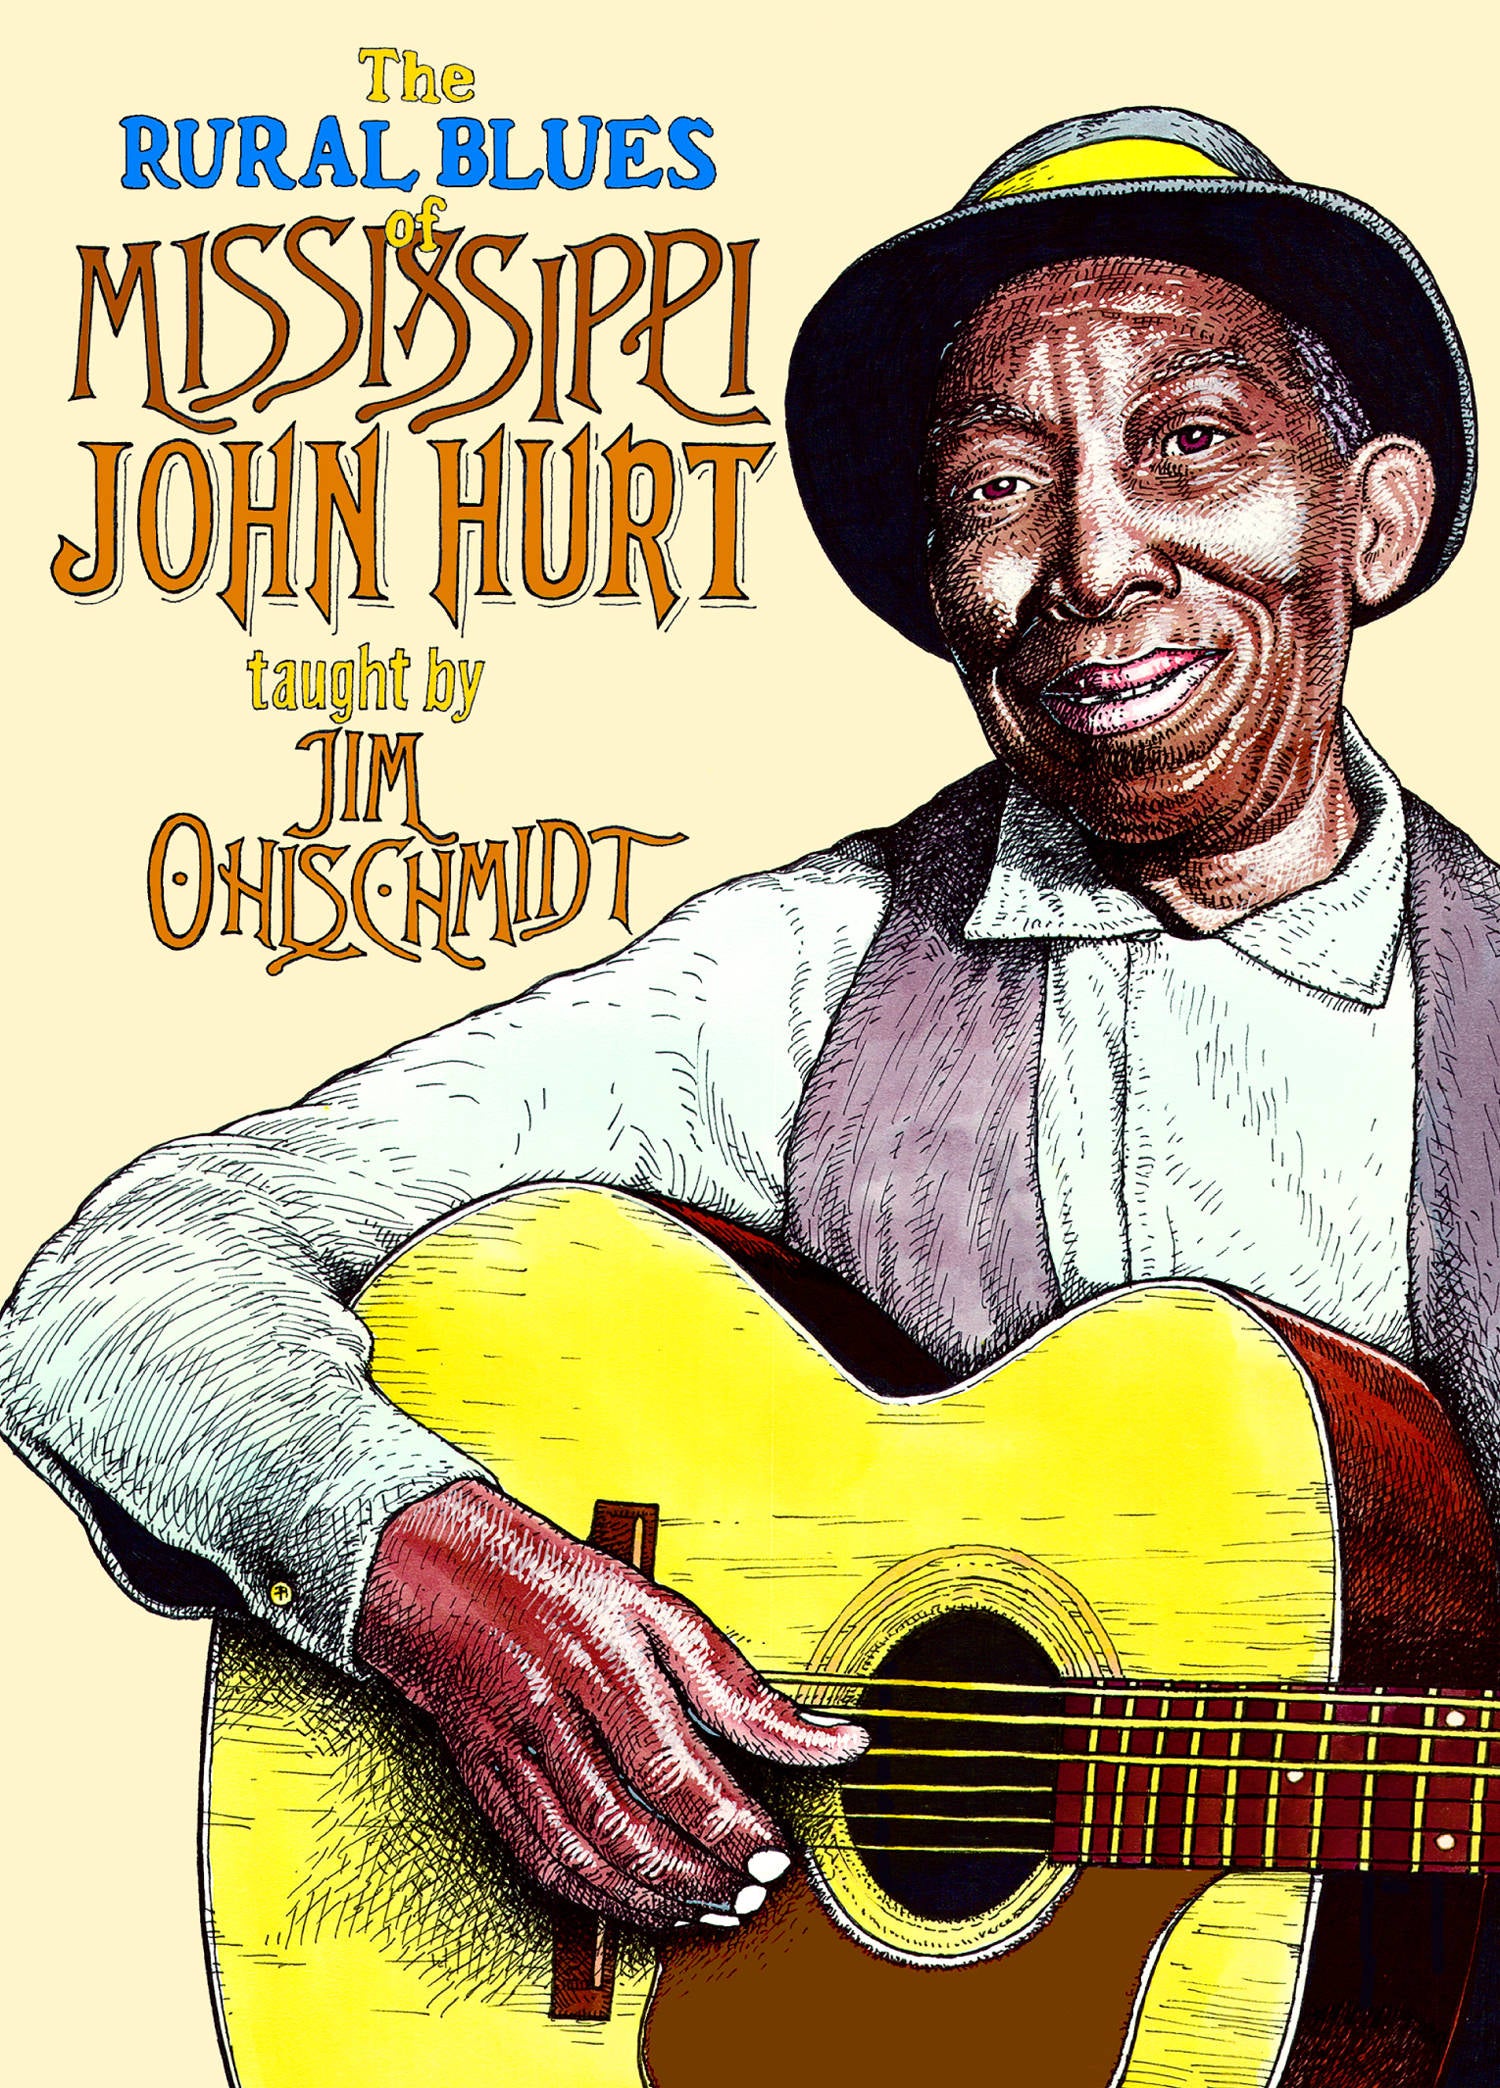 Image 1 of The Rural Blues of Mississippi John Hurt - SKU# 304-DVD863 : Product Type Media : Elderly Instruments